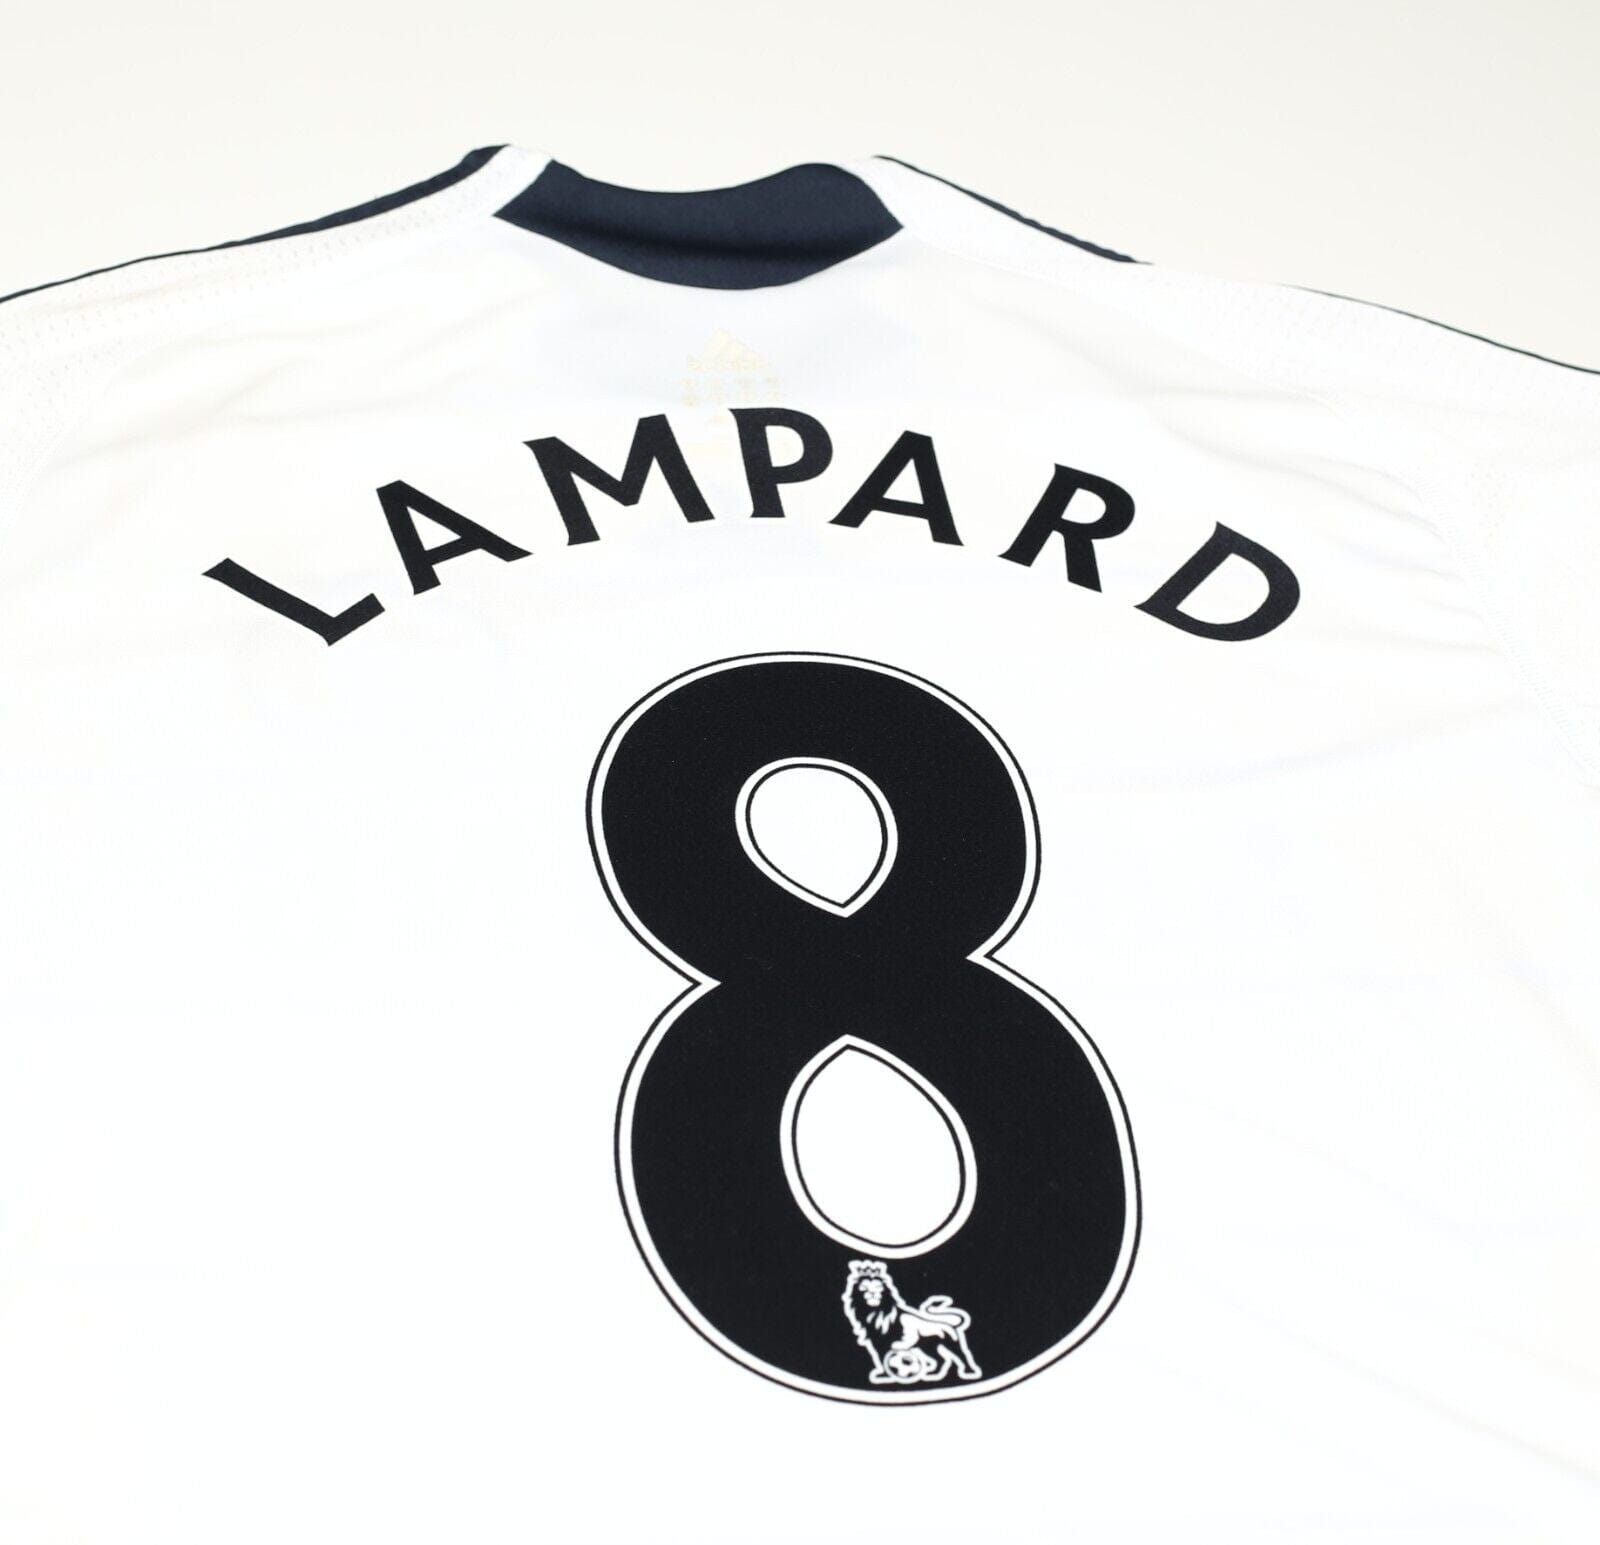 2009/10 LAMPARD #8 Chelsea Vintage adidas Third Football Shirt Jersey (M) 3rd